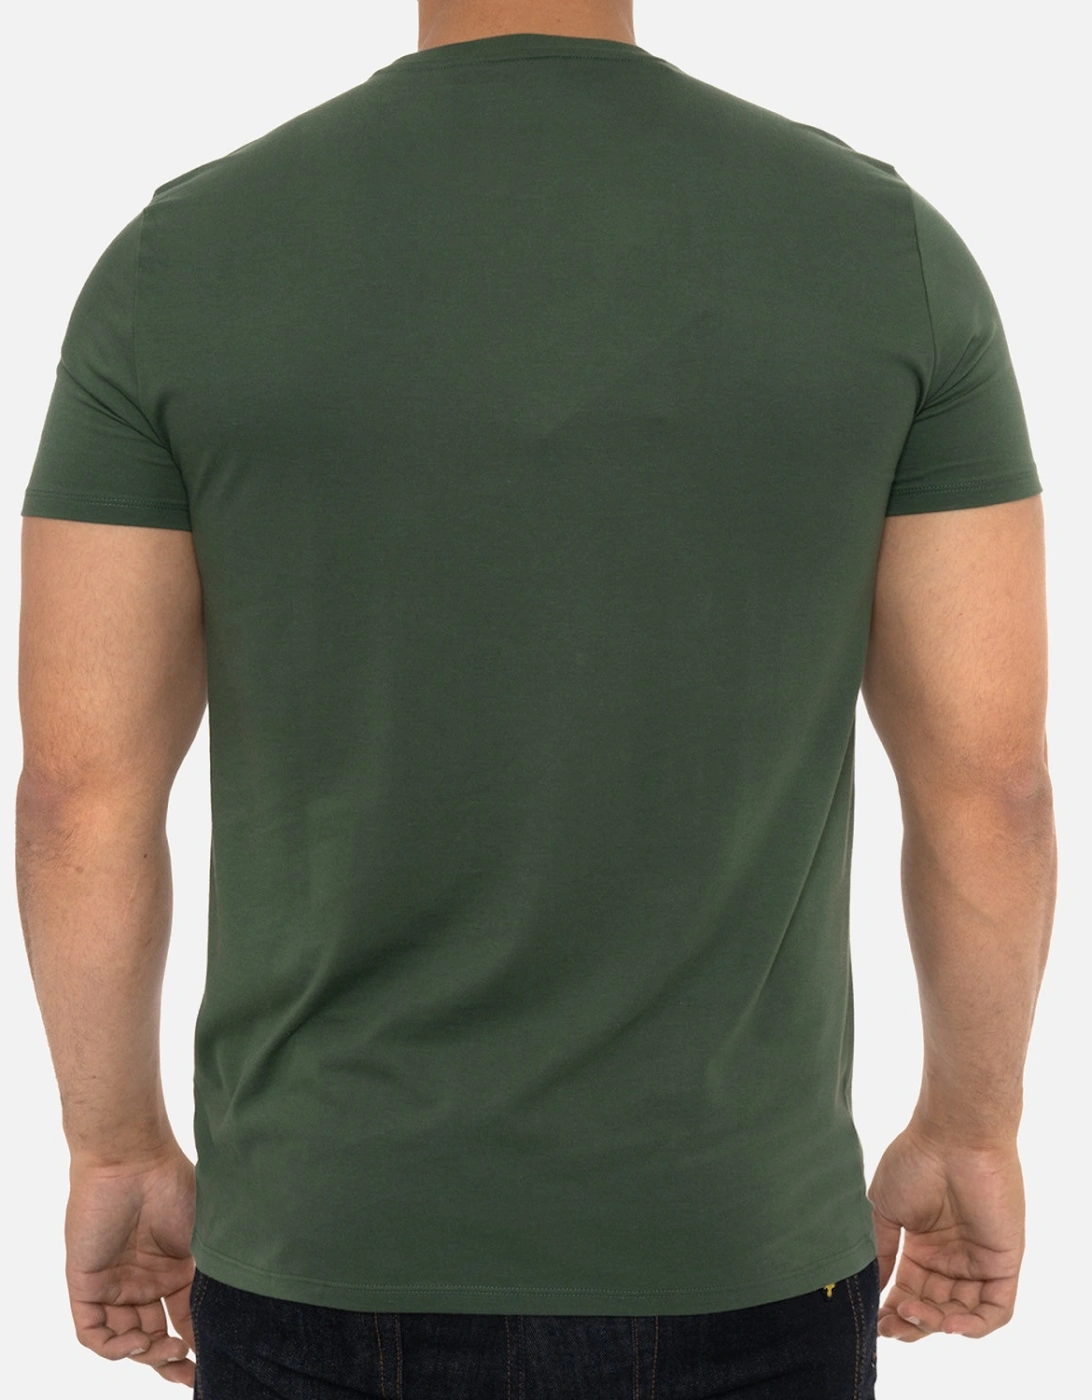 Mens Plain Crew T-Shirt (Green)